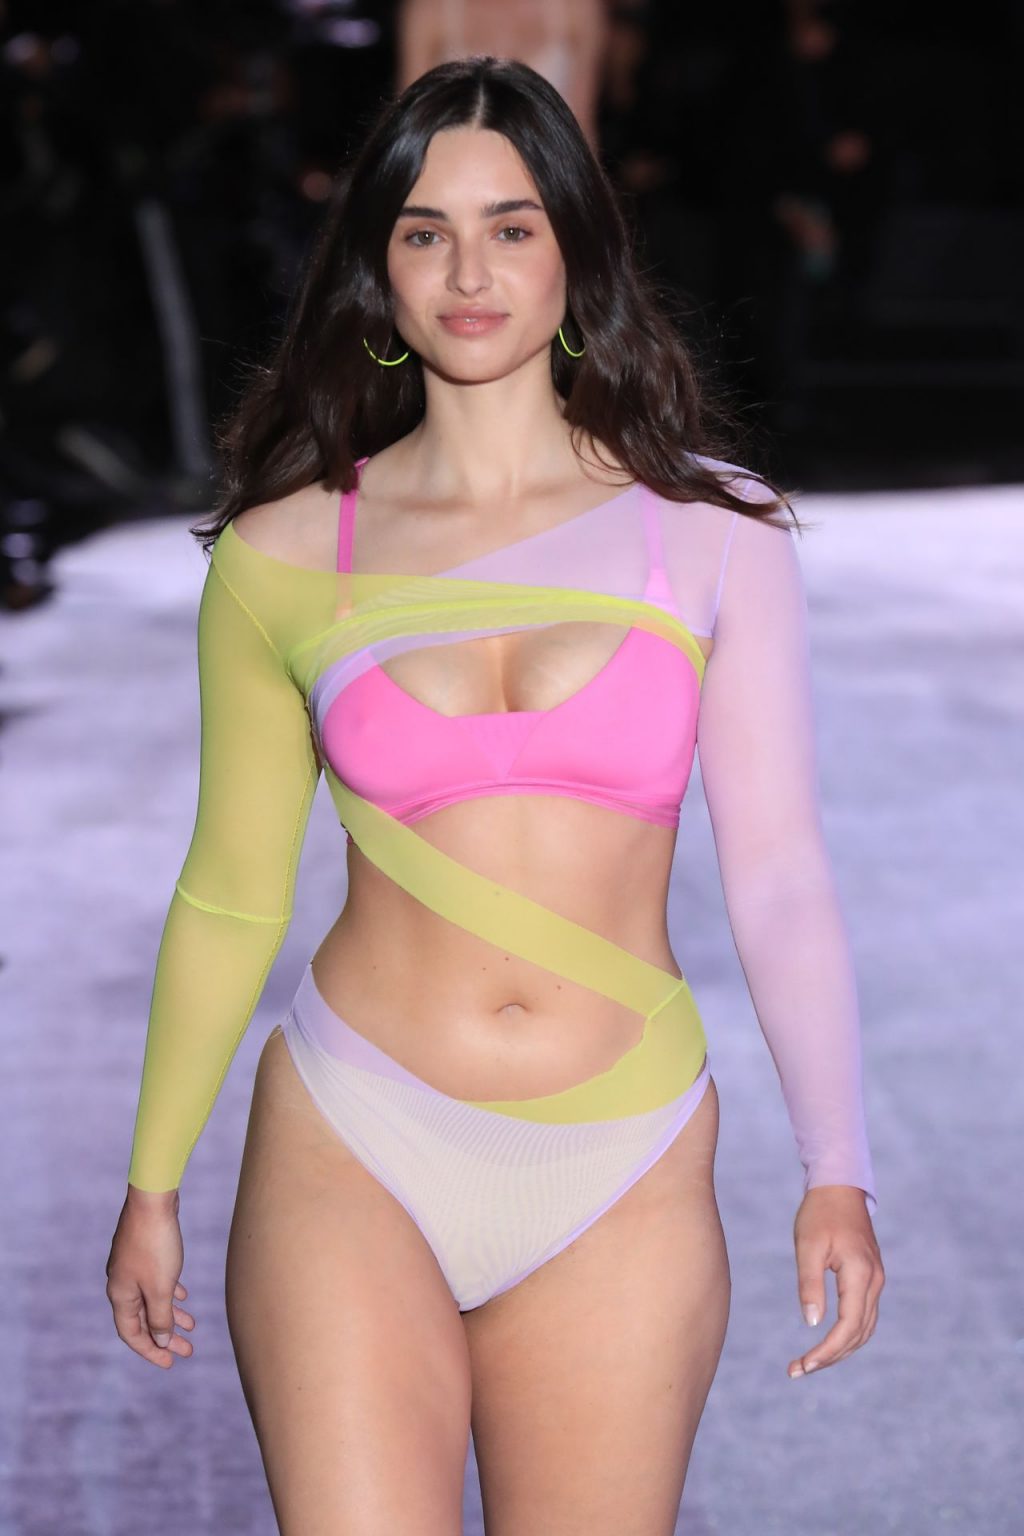 Models Display Their Tits and Legs at the Etam Fashion Show (93 Photos)